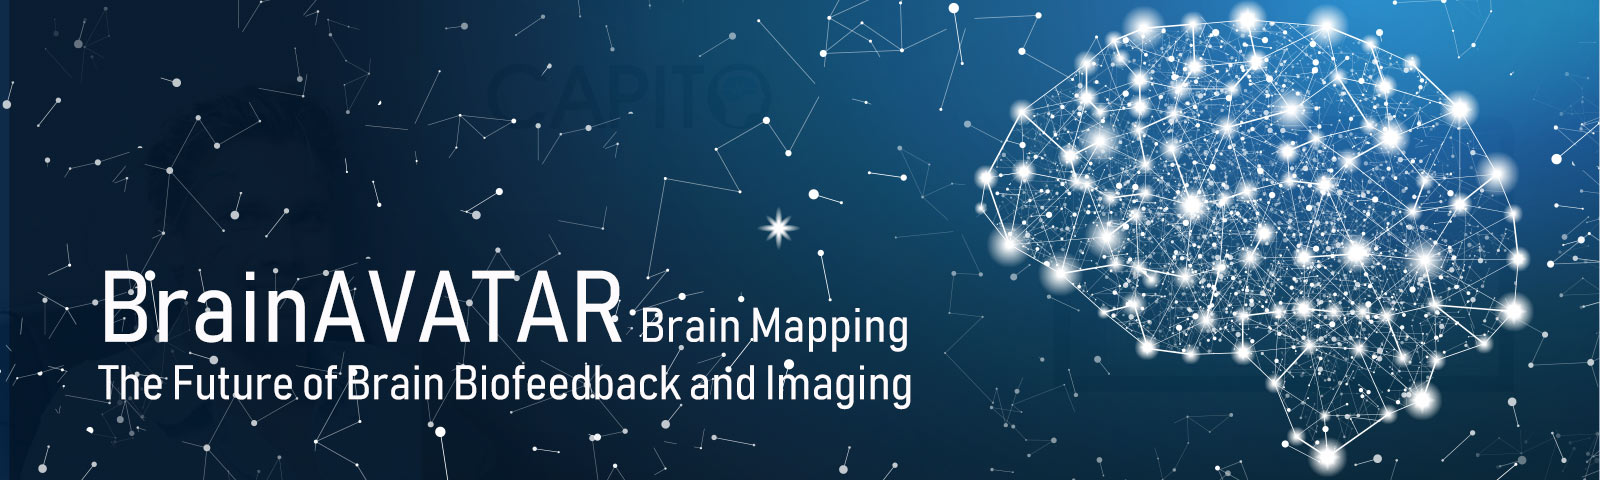 BrainAVATAR Brain Mapping - The Future of Brain Biofeedback and Imaging